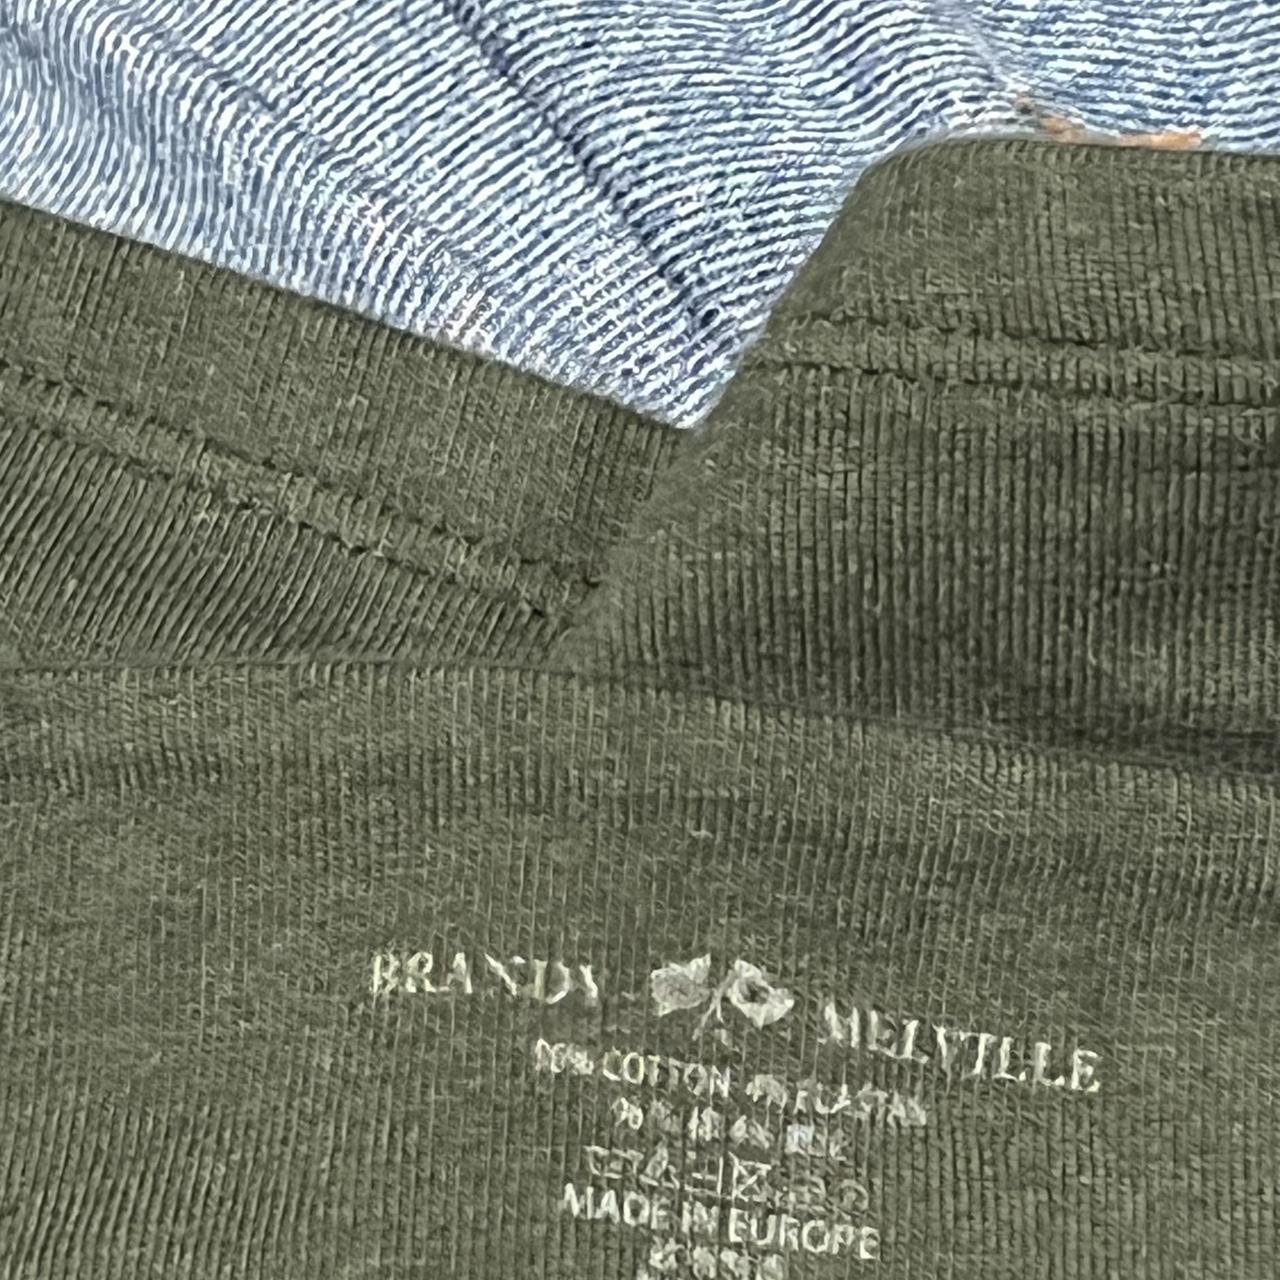 Brandy Melville, one size, green halter top